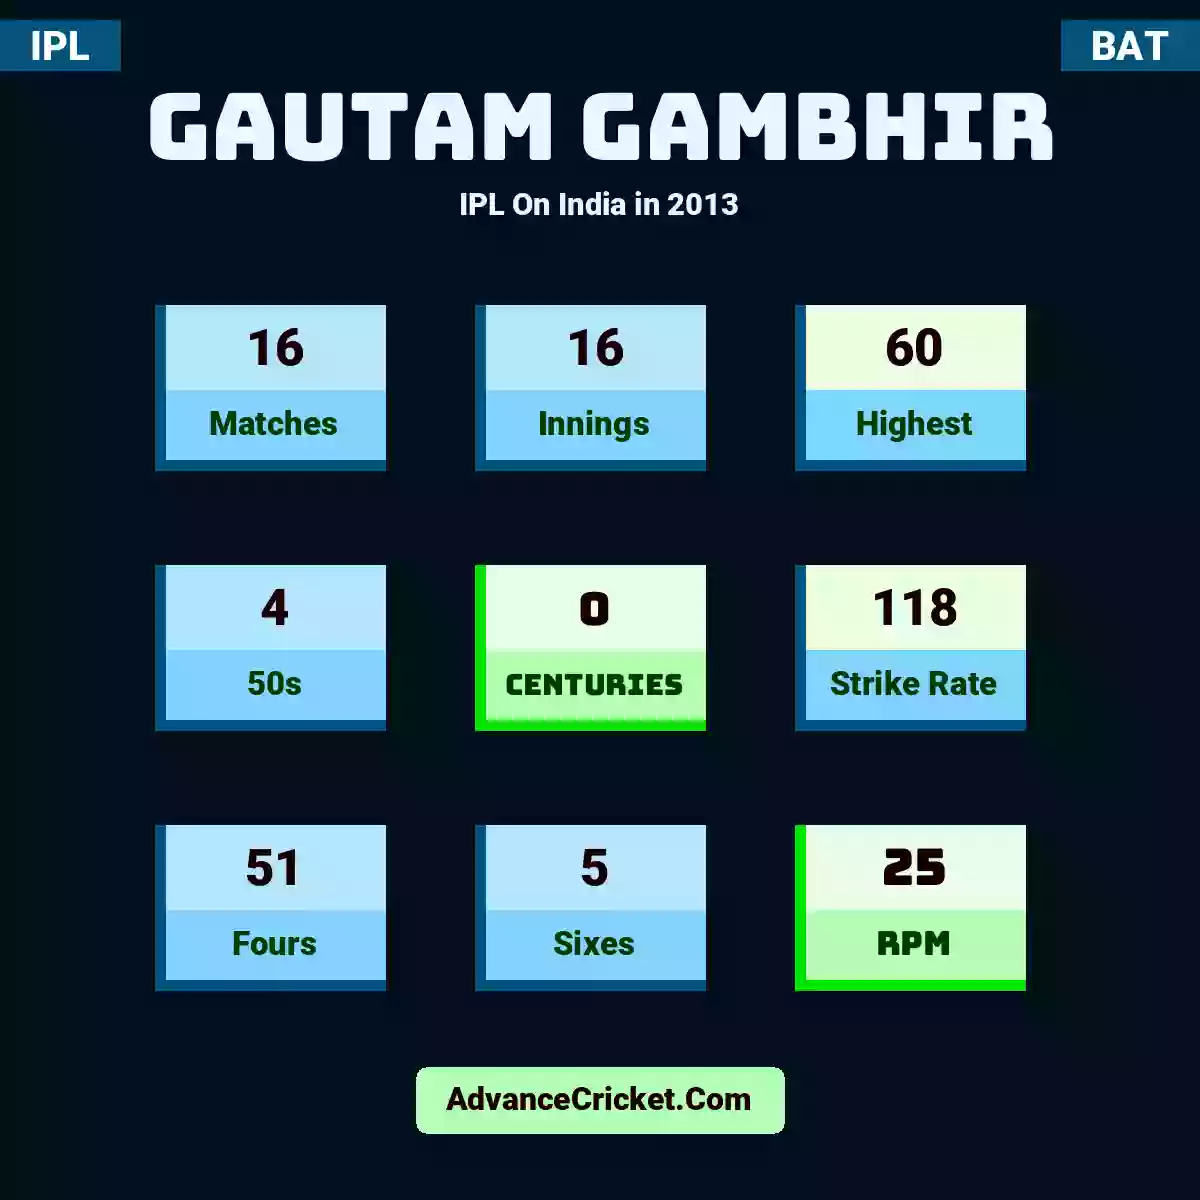 Gautam Gambhir IPL  On India in 2013, Gautam Gambhir played 16 matches, scored 60 runs as highest, 4 half-centuries, and 0 centuries, with a strike rate of 118. G.Gambhir hit 51 fours and 5 sixes, with an RPM of 25.